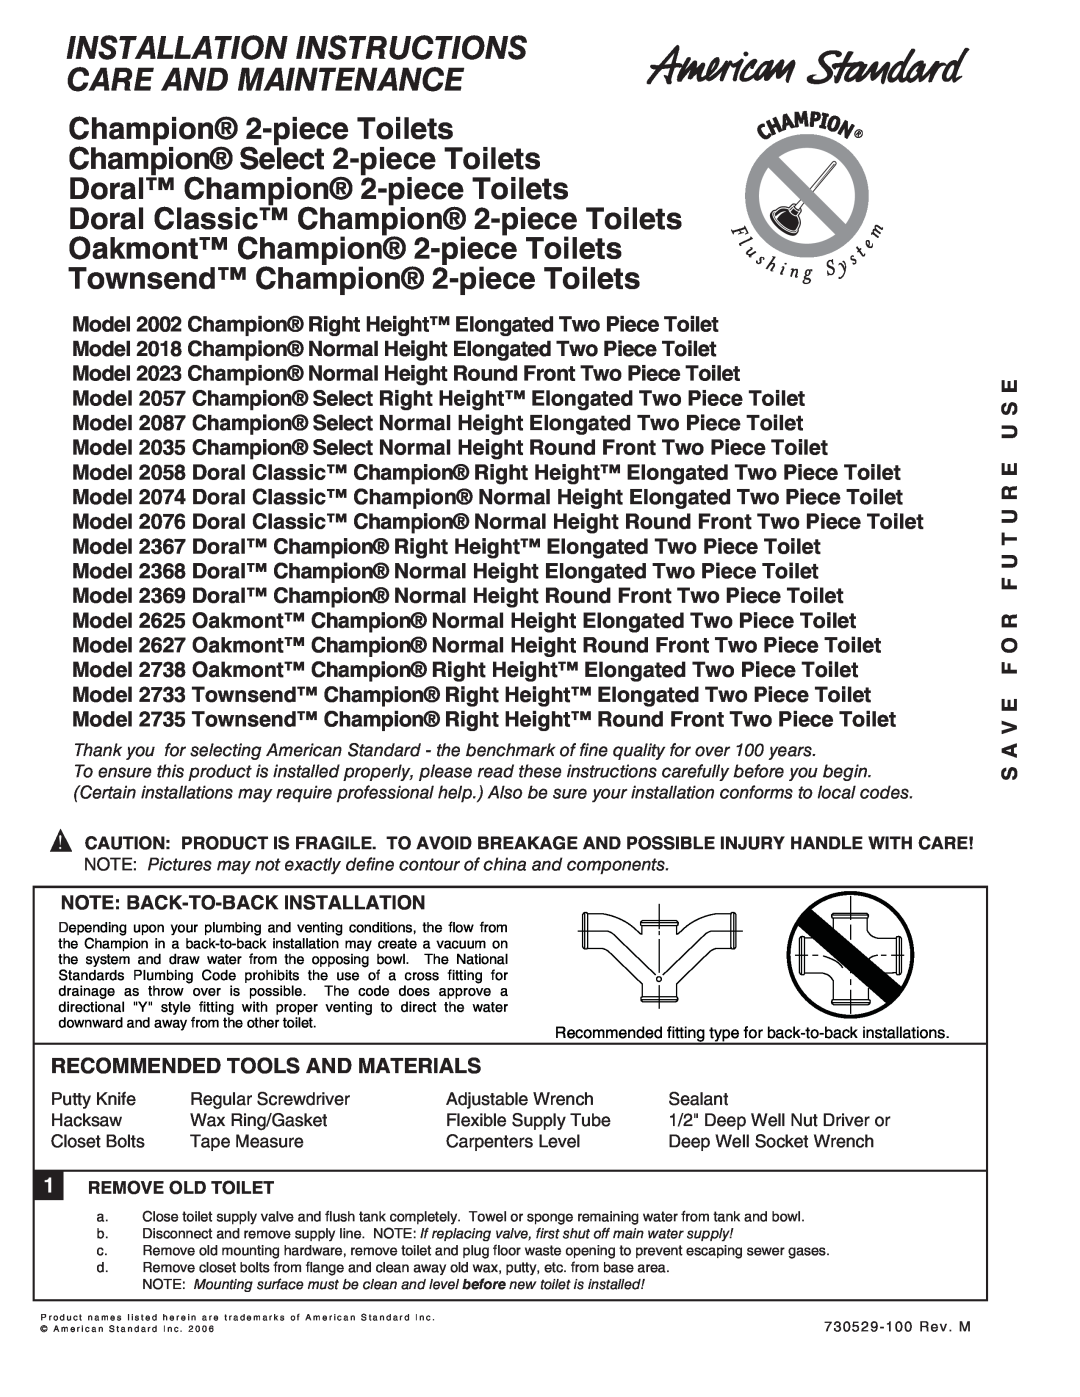 American Standard 2473 installation instructions Recommended Tools And Materials, S A V E F O R F U T U R E U S E, Models 